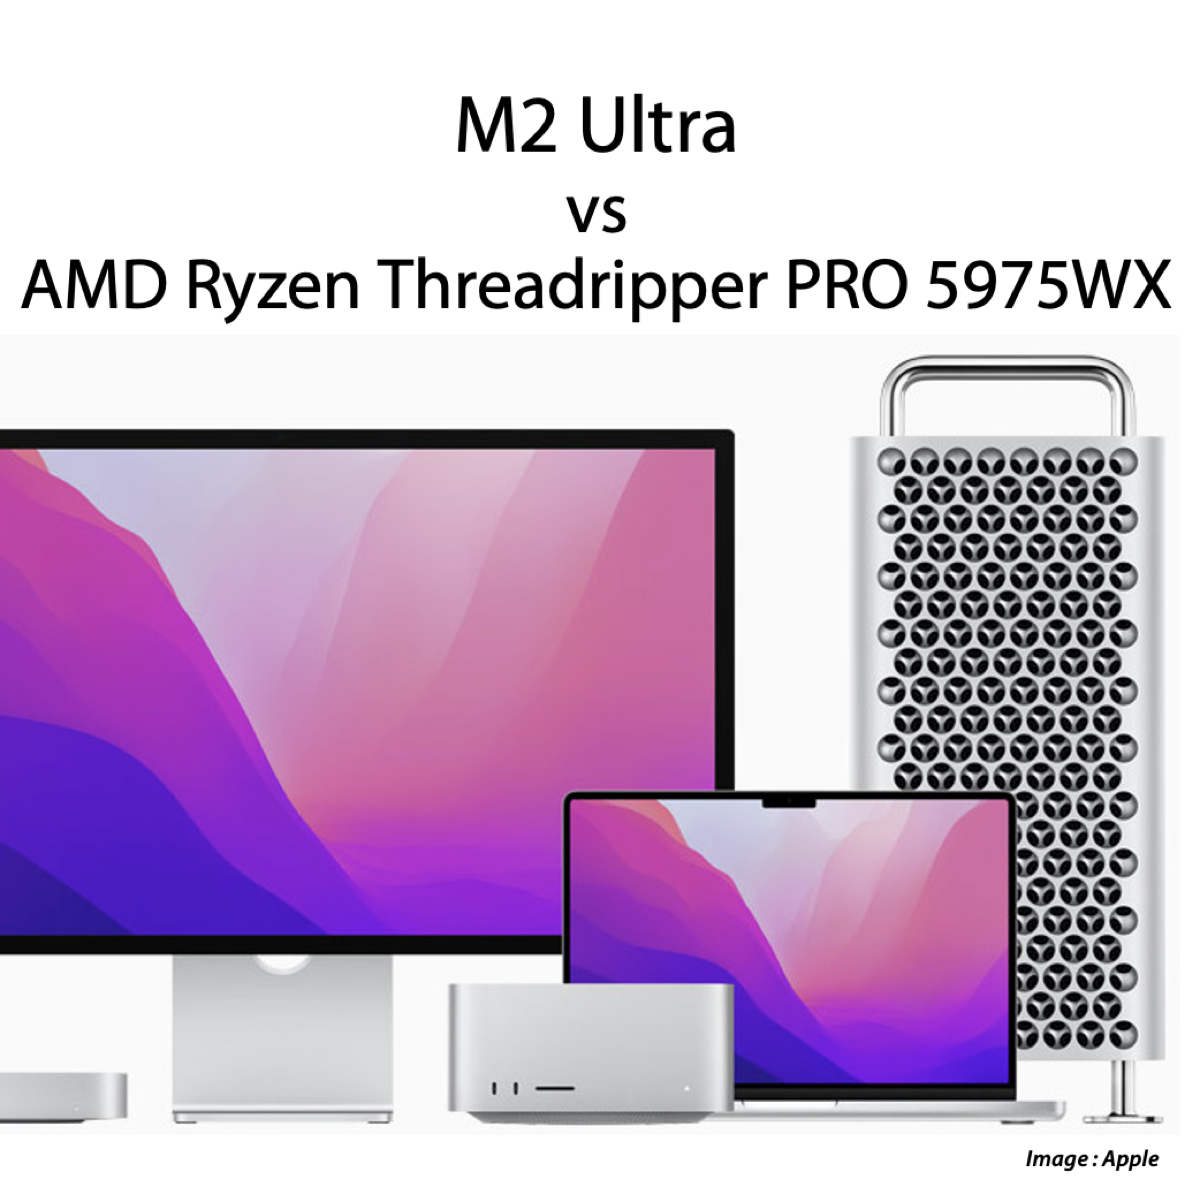 M2 UltraがRyzen Threadripper PRO 5975WX匹敵！？